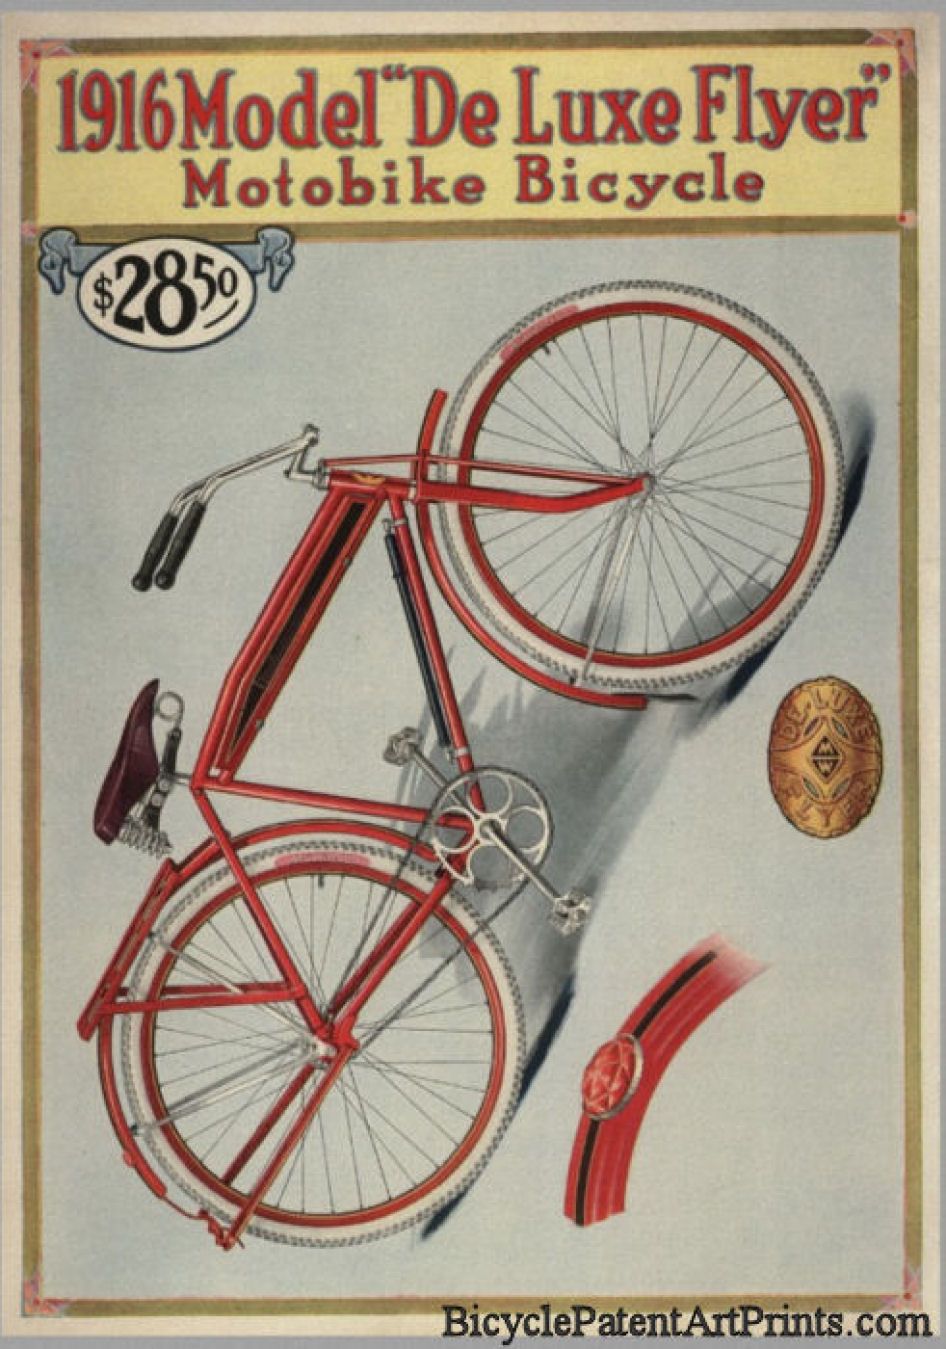 1916 Hawthorne De Luxe Flyer Motobike Red Bicycle